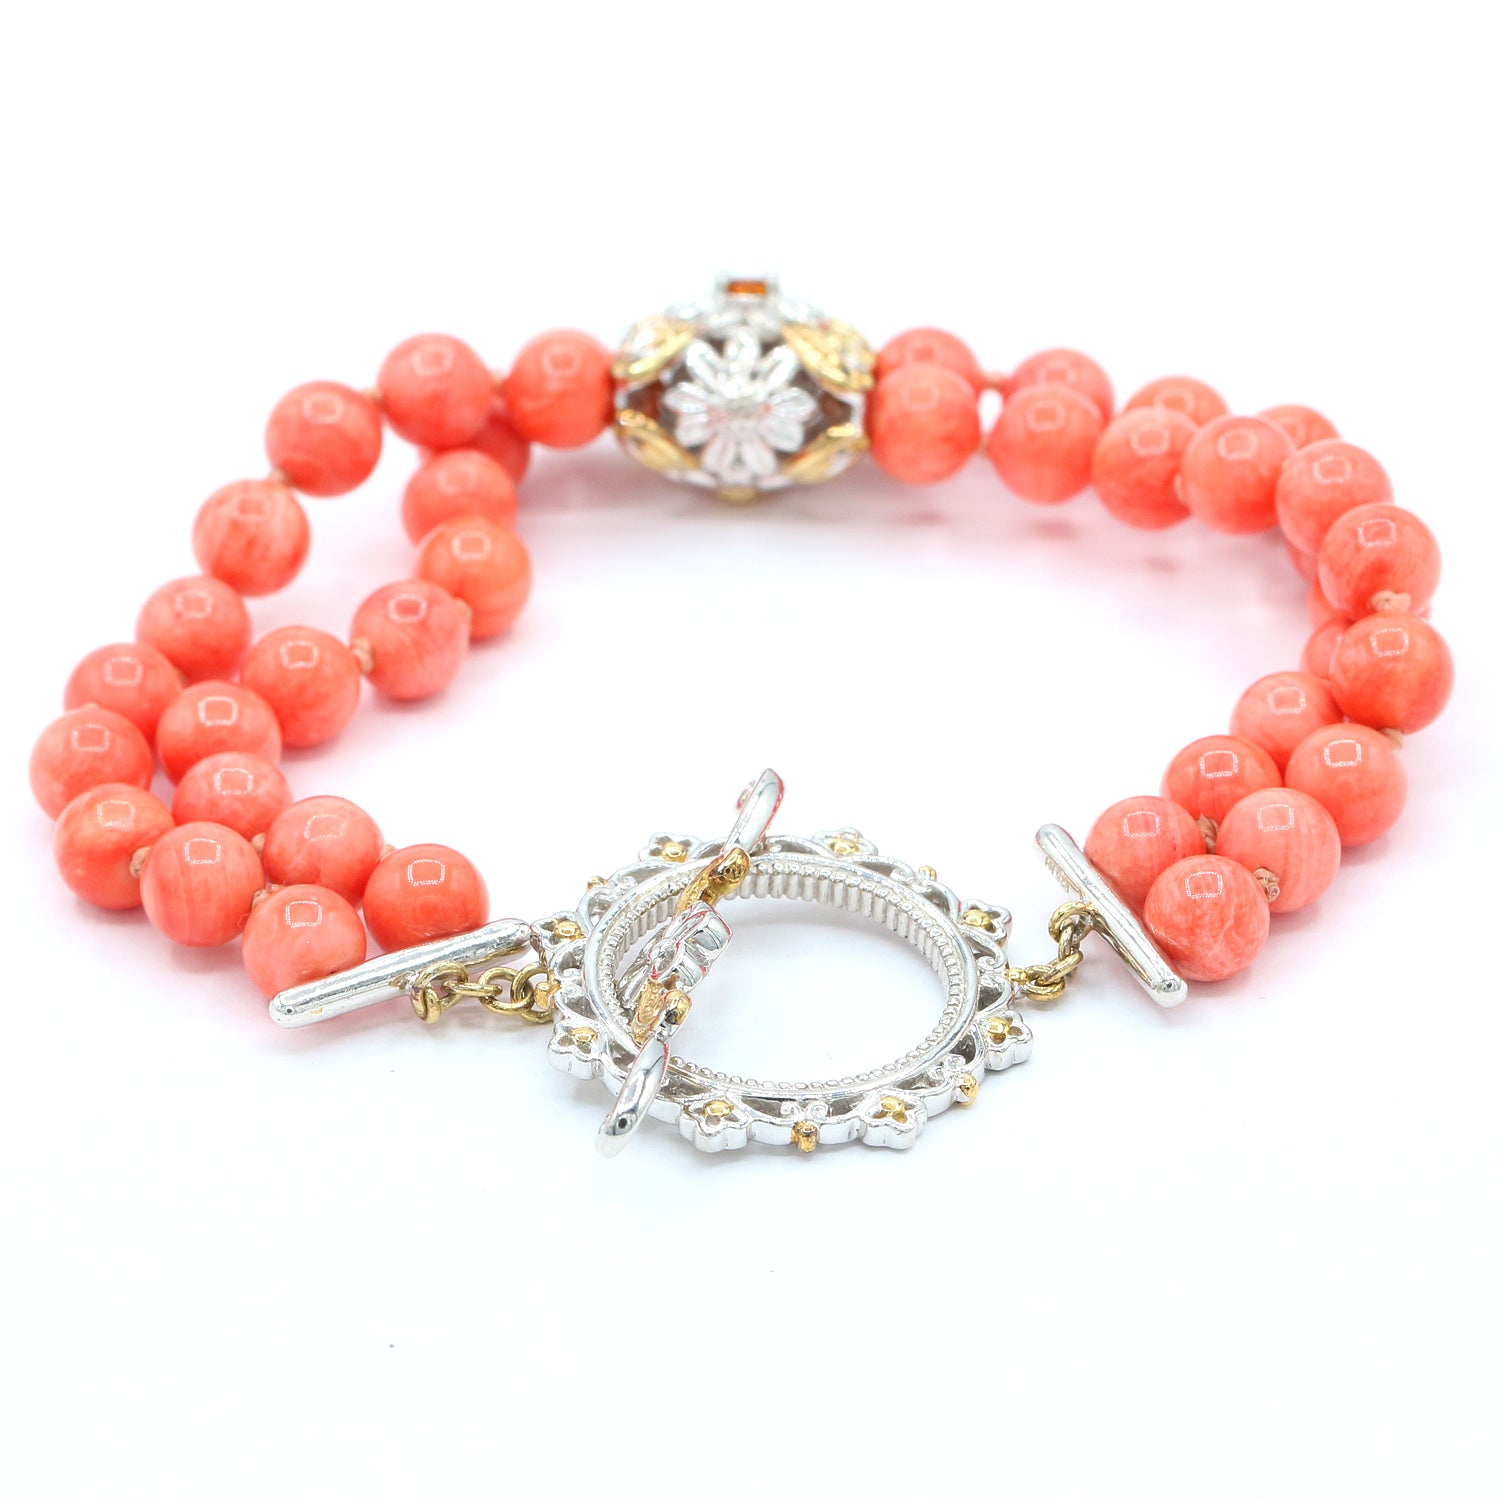 Gems en Vogue Salmon Coral & Madeira Citrine Bead Flower Bracelet